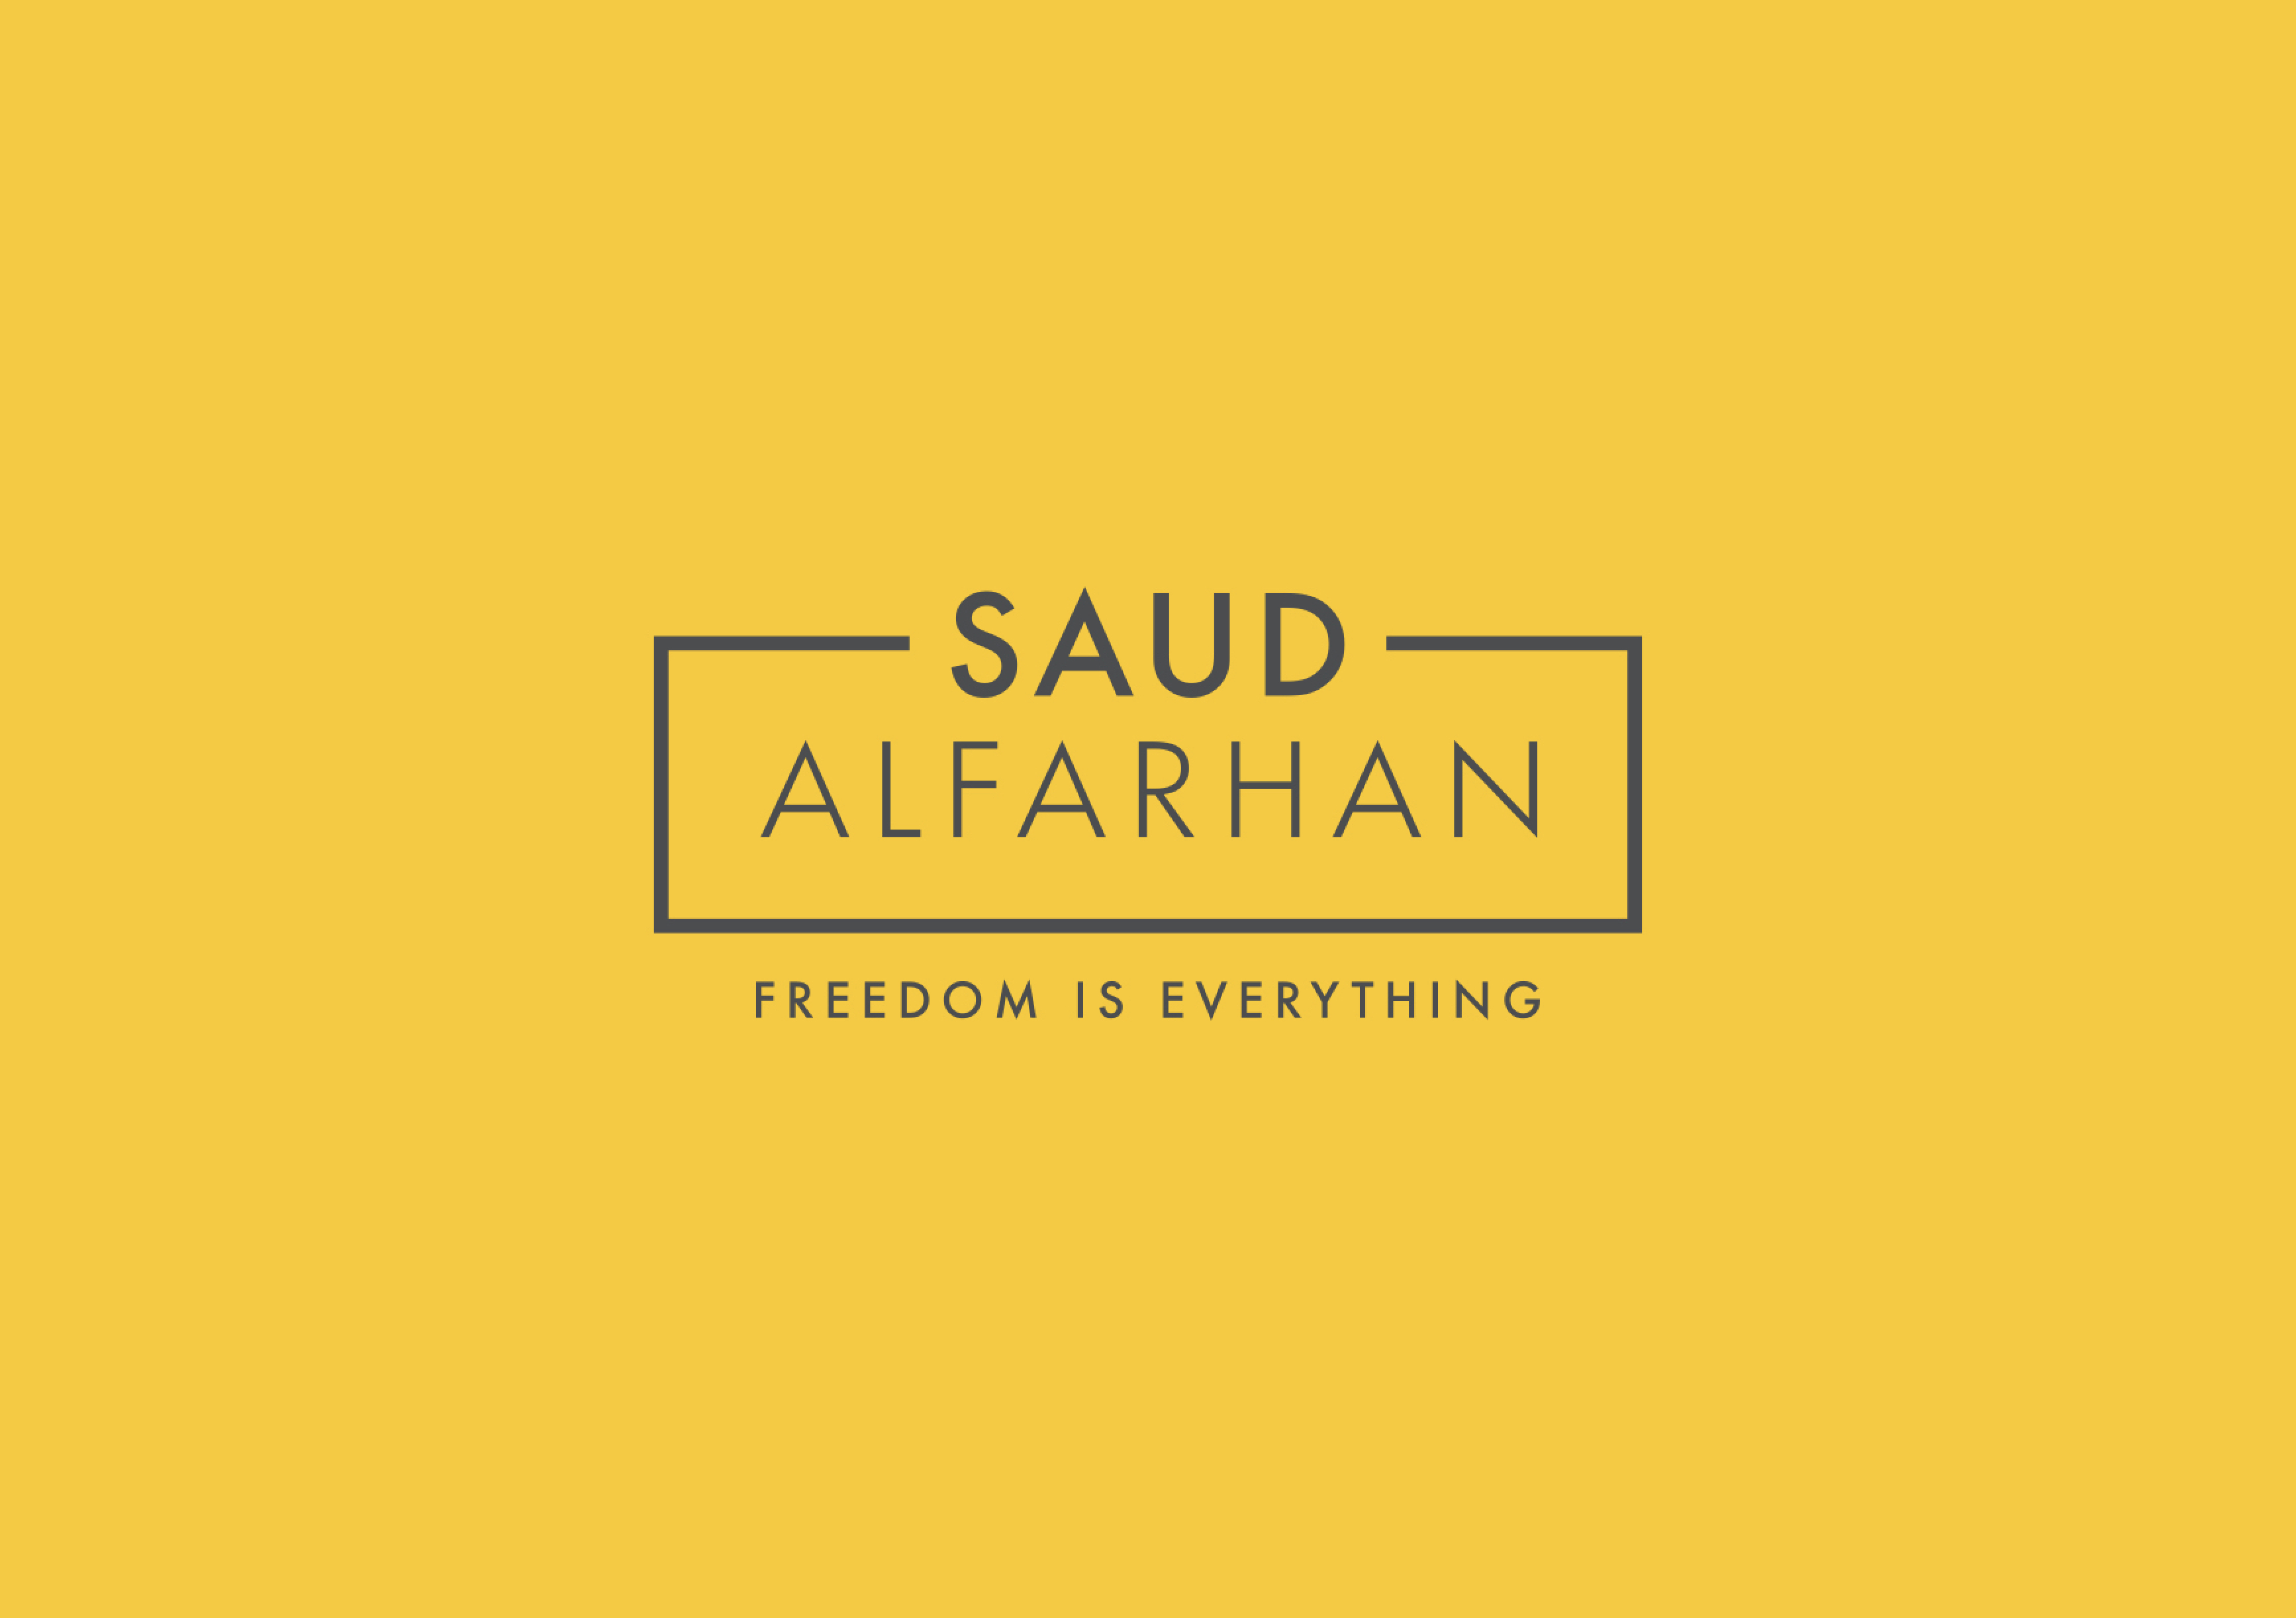 Saud Alfarhan Consultancy and Coaching